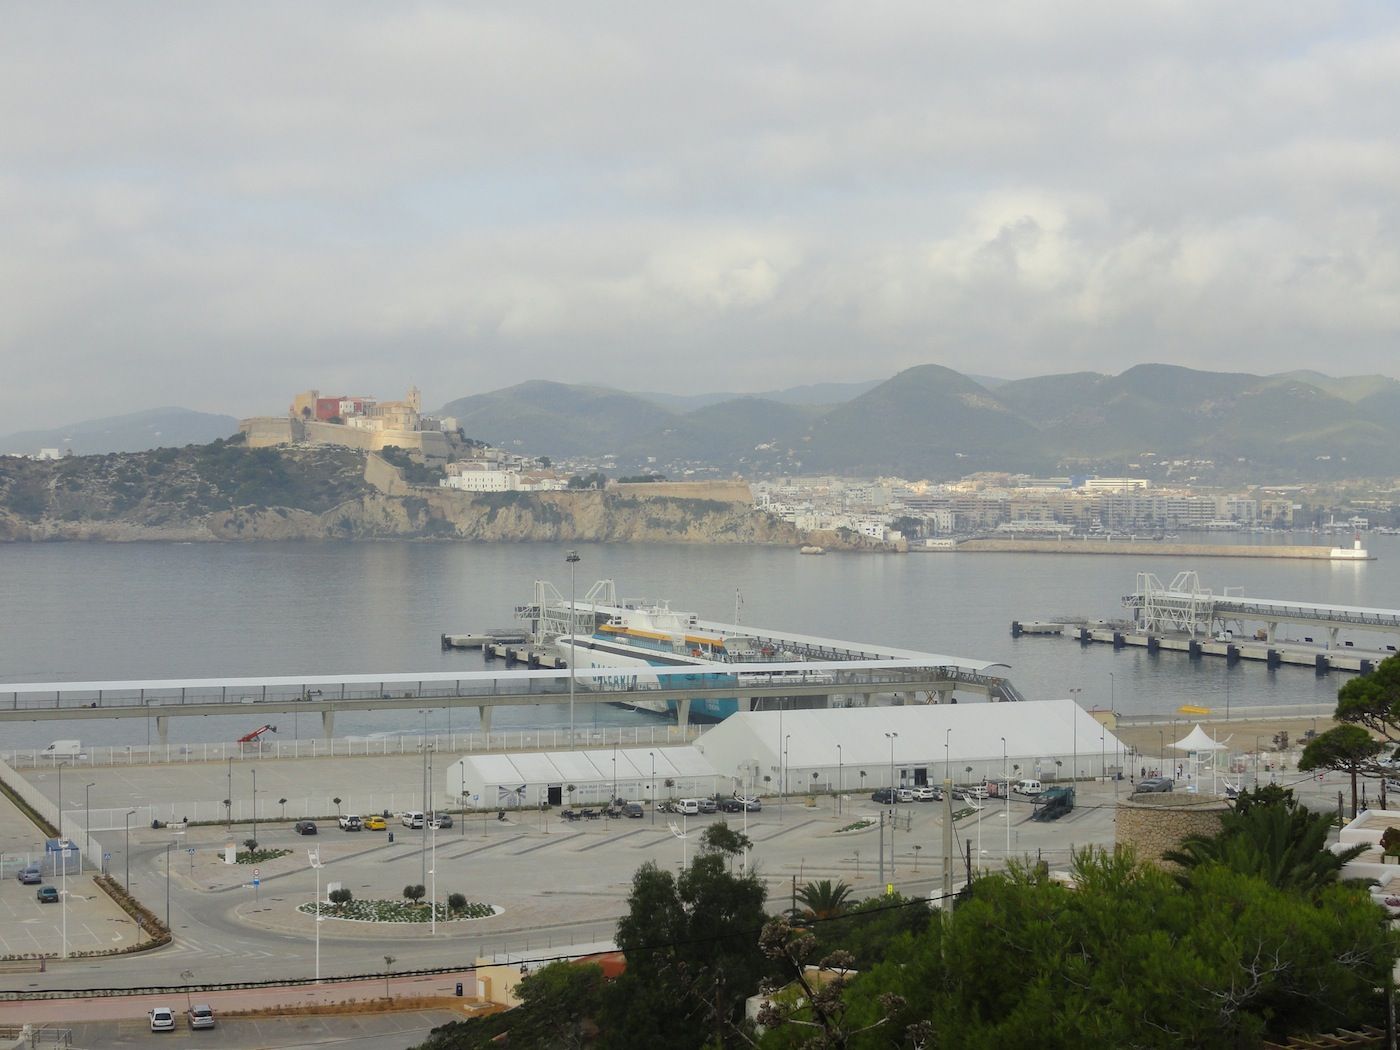 Muelles del Botafoc puerto de Ibiza